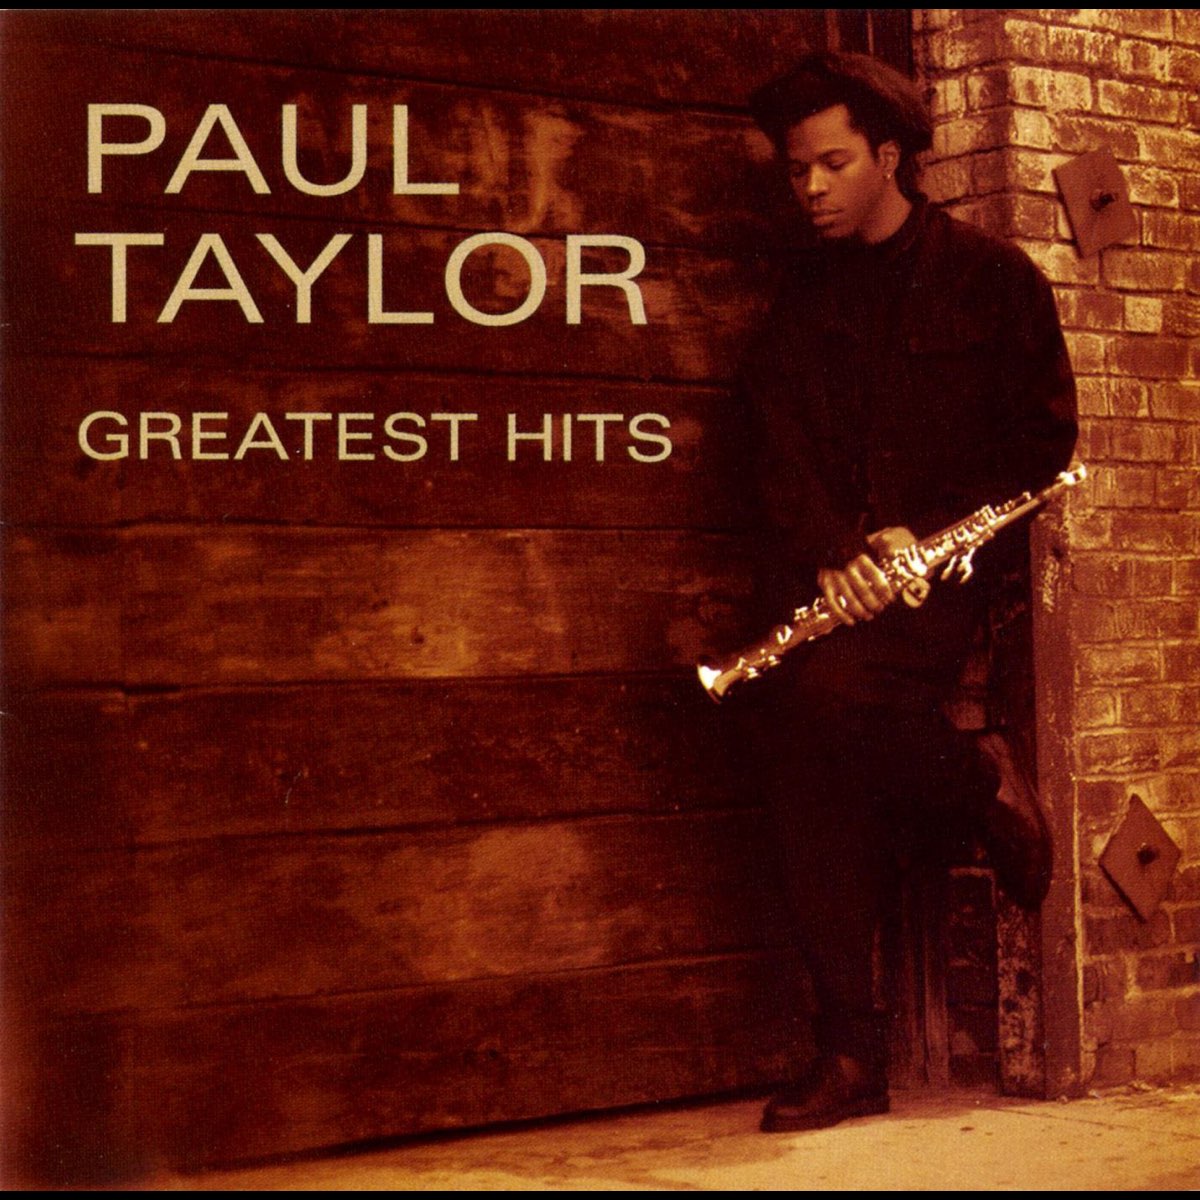 Paul taylor